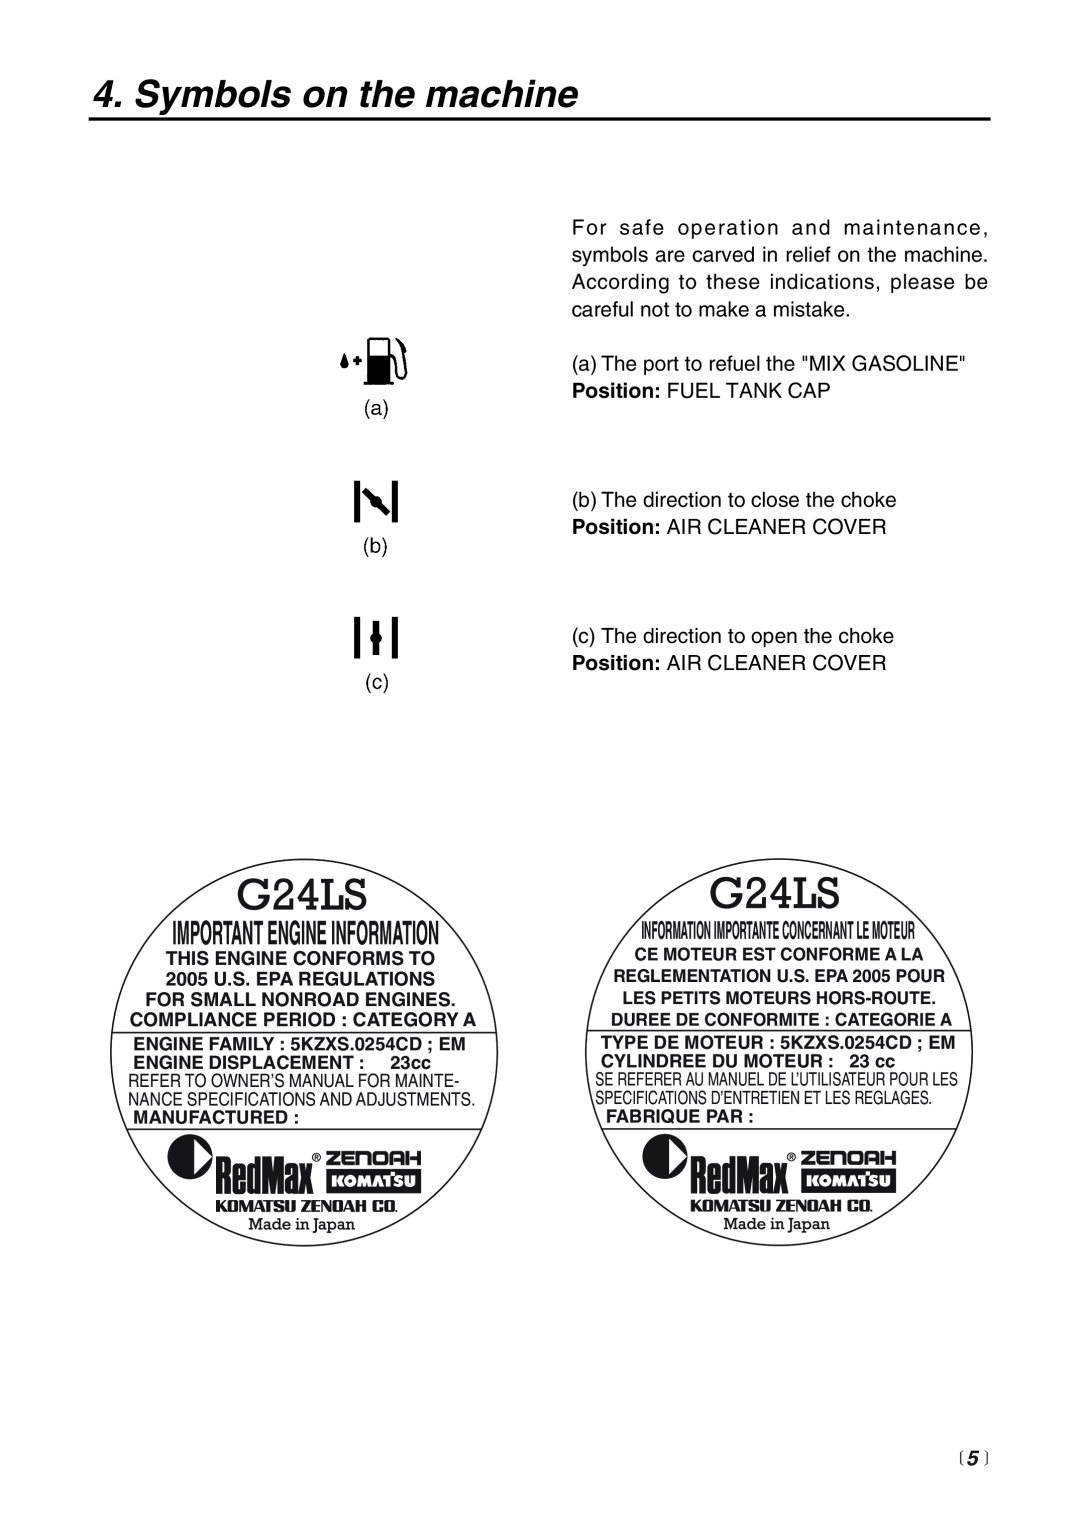 Zenoah BT225 manual Symbols on the machine,  5 , Important Engine Information 